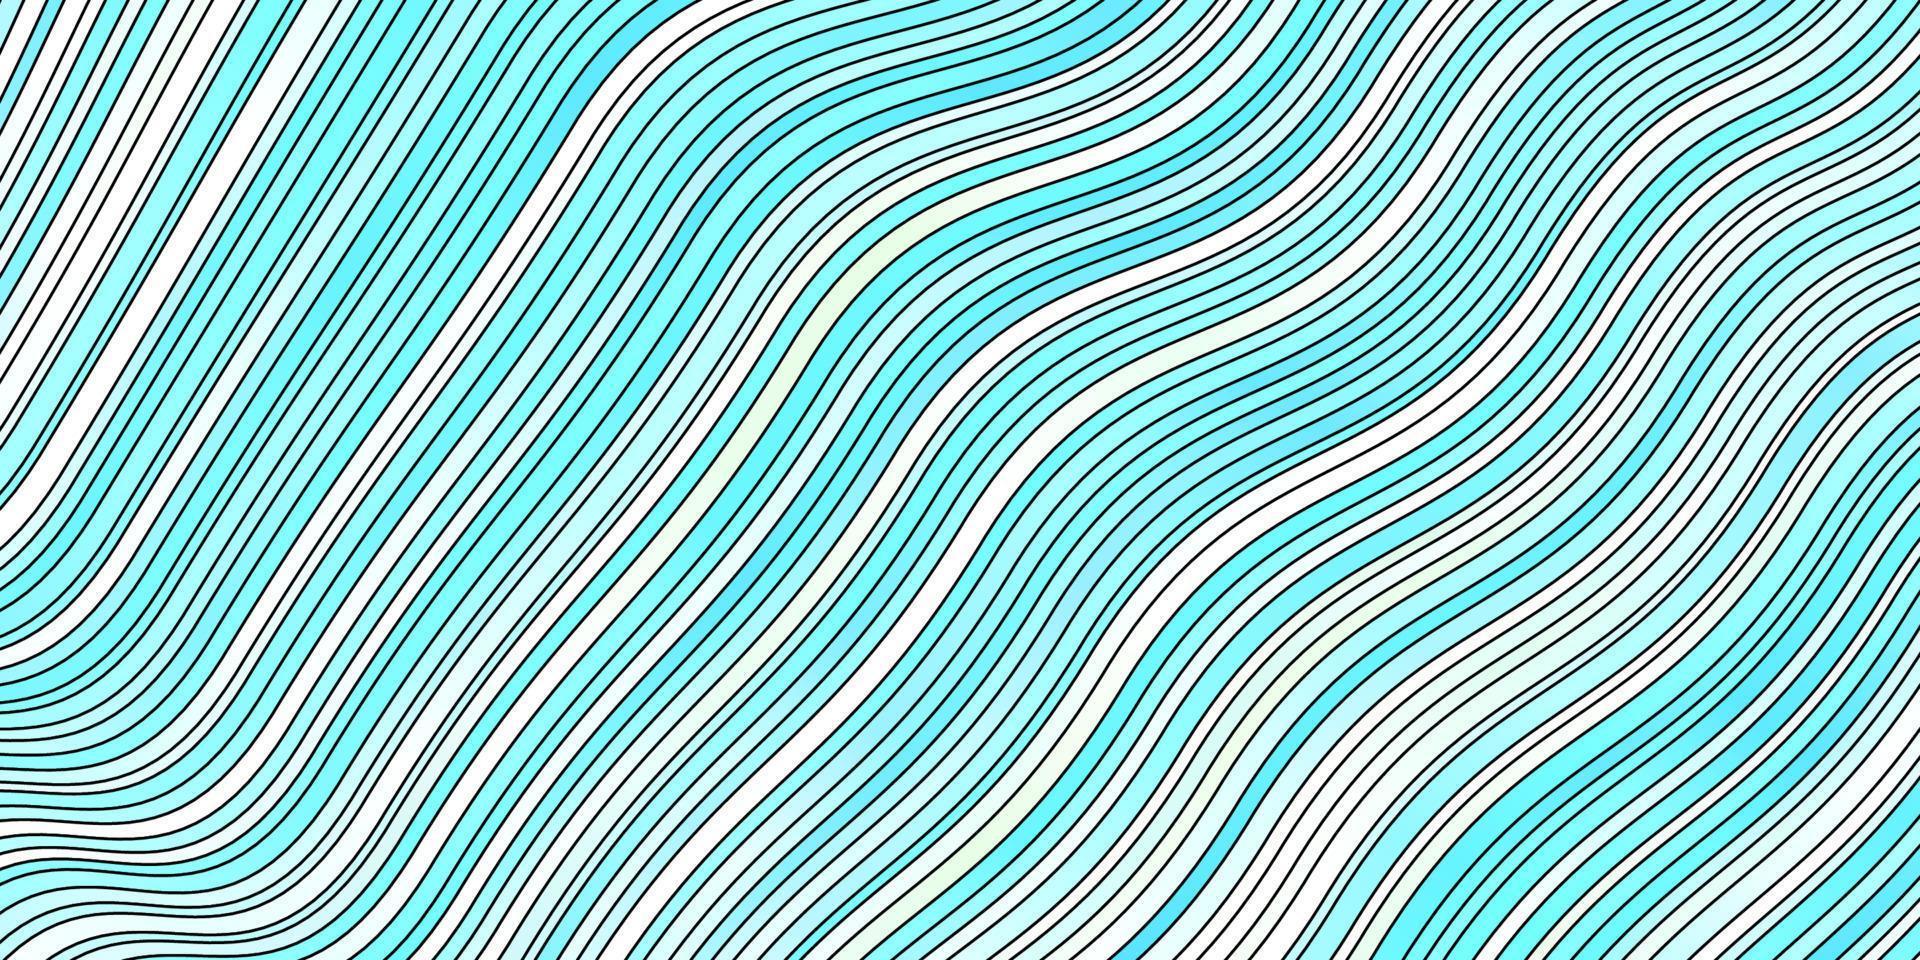 hellblaue Vektorschablone mit Kurven. vektor